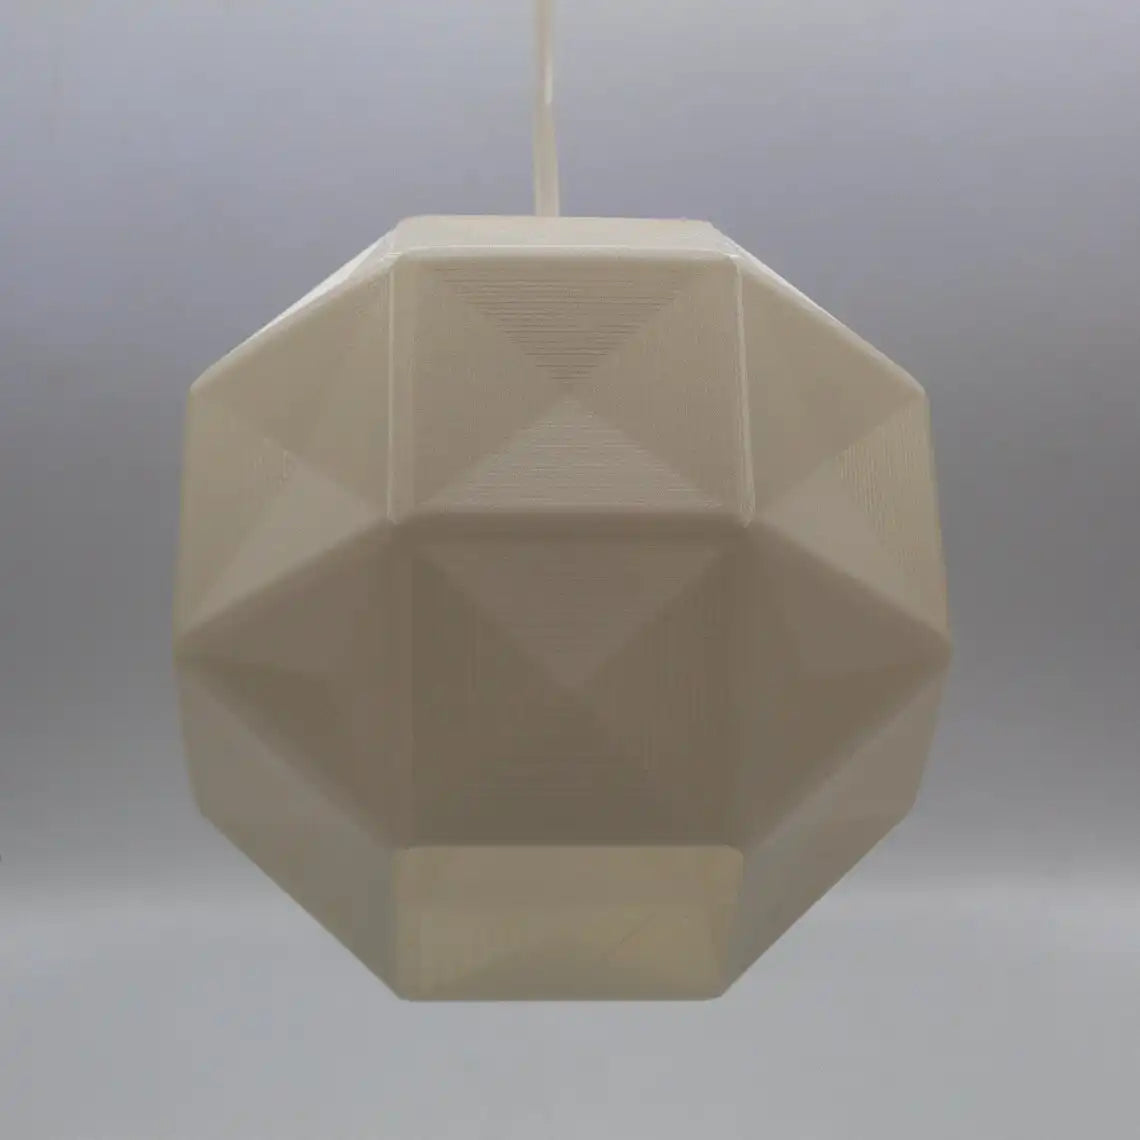 Tessera Lampshade - Modern Minimalist Design